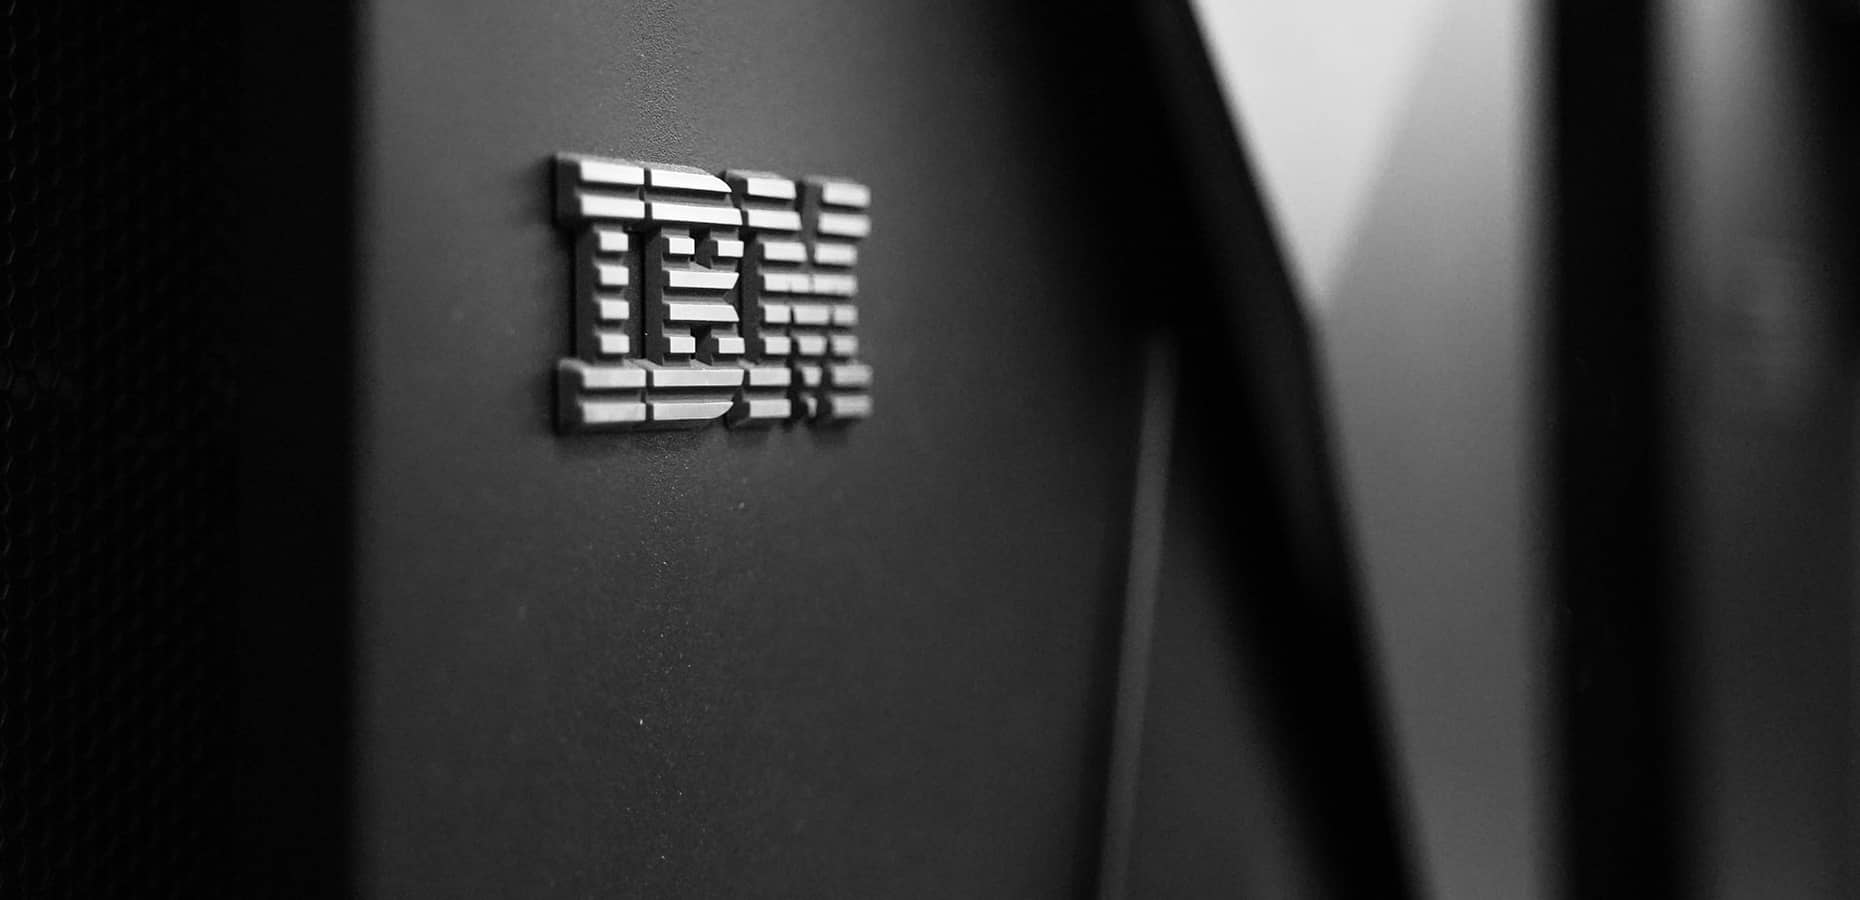 A black and white image of the IBM logo on a wall. IBM Hiring Process: Getting a Job at IBM